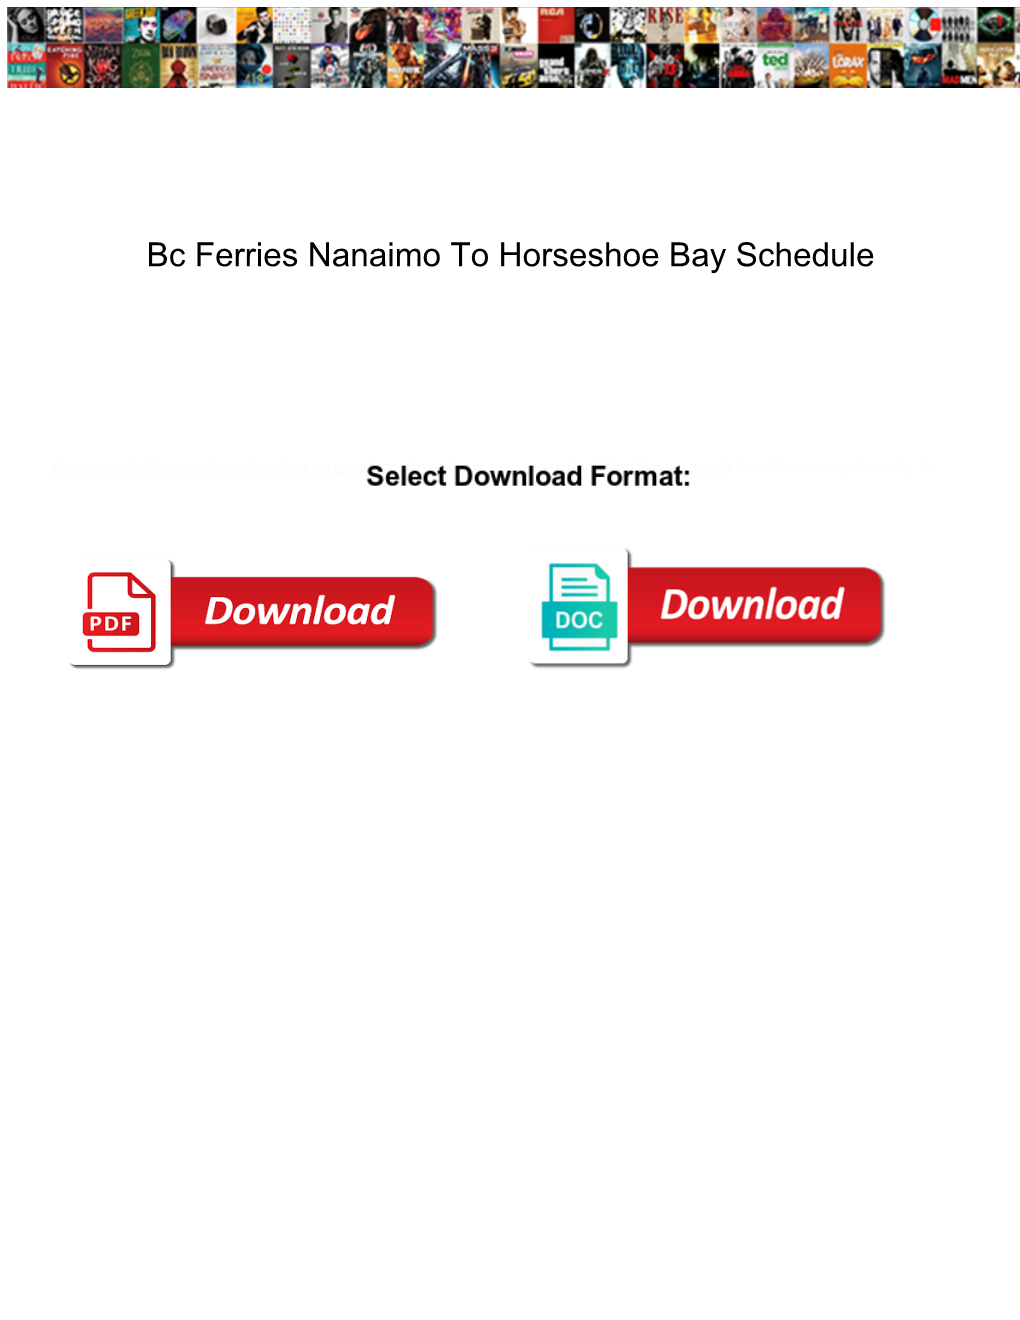 Bc Ferries Nanaimo to Horseshoe Bay Schedule